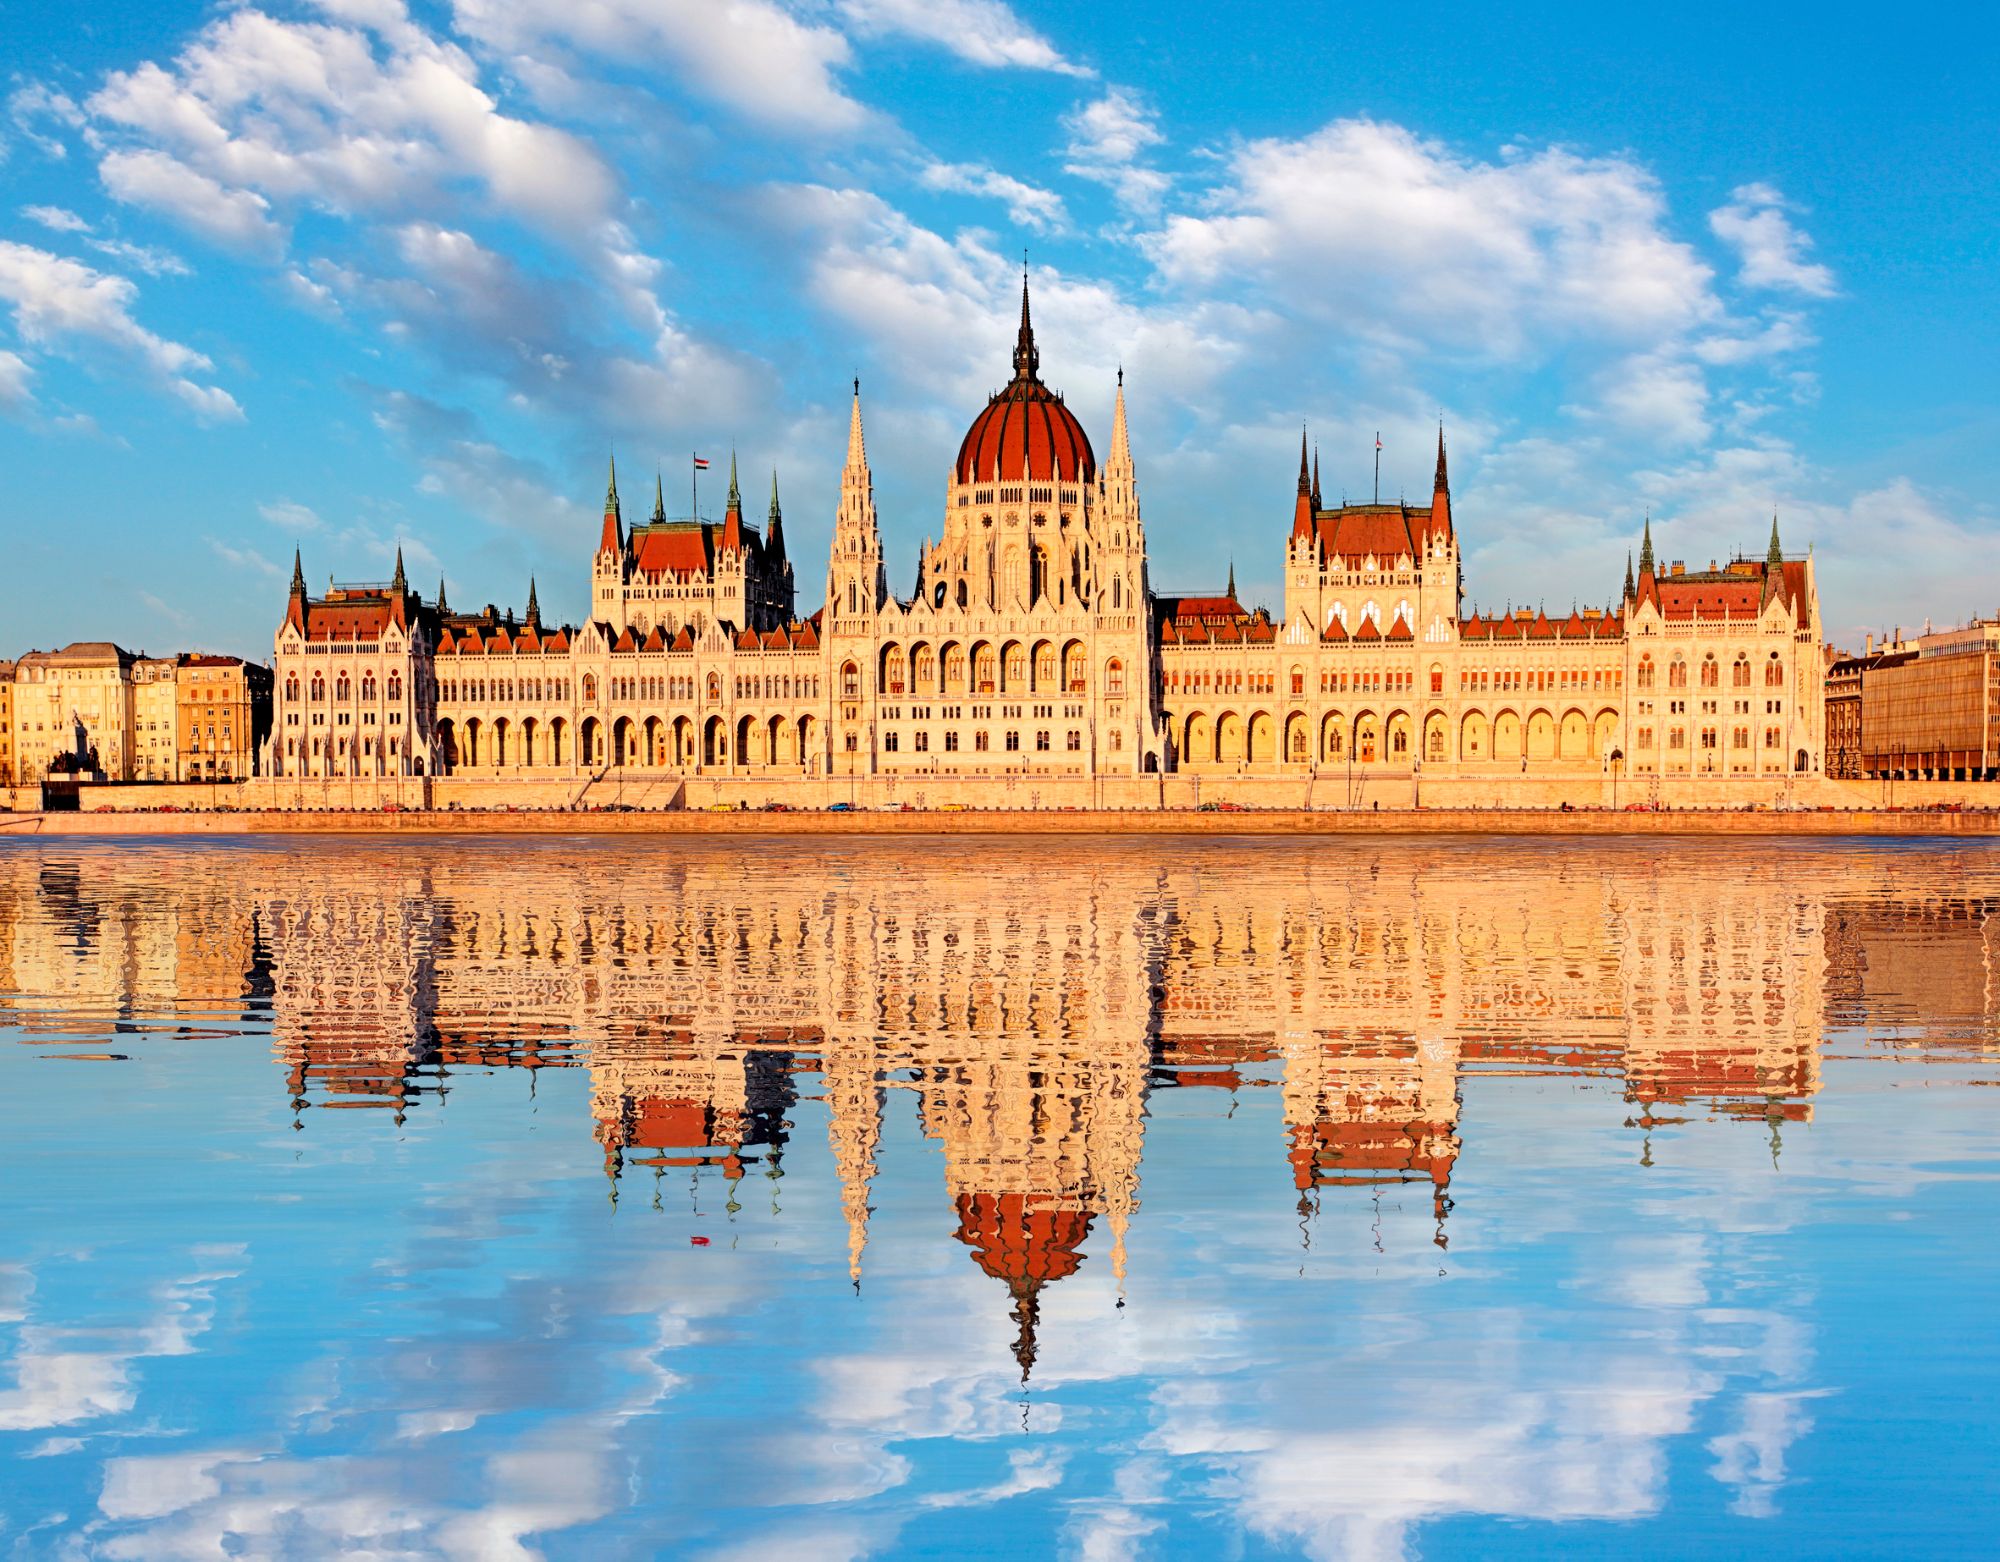 budapest-landmark-parliament-big-bus-tours.jpg